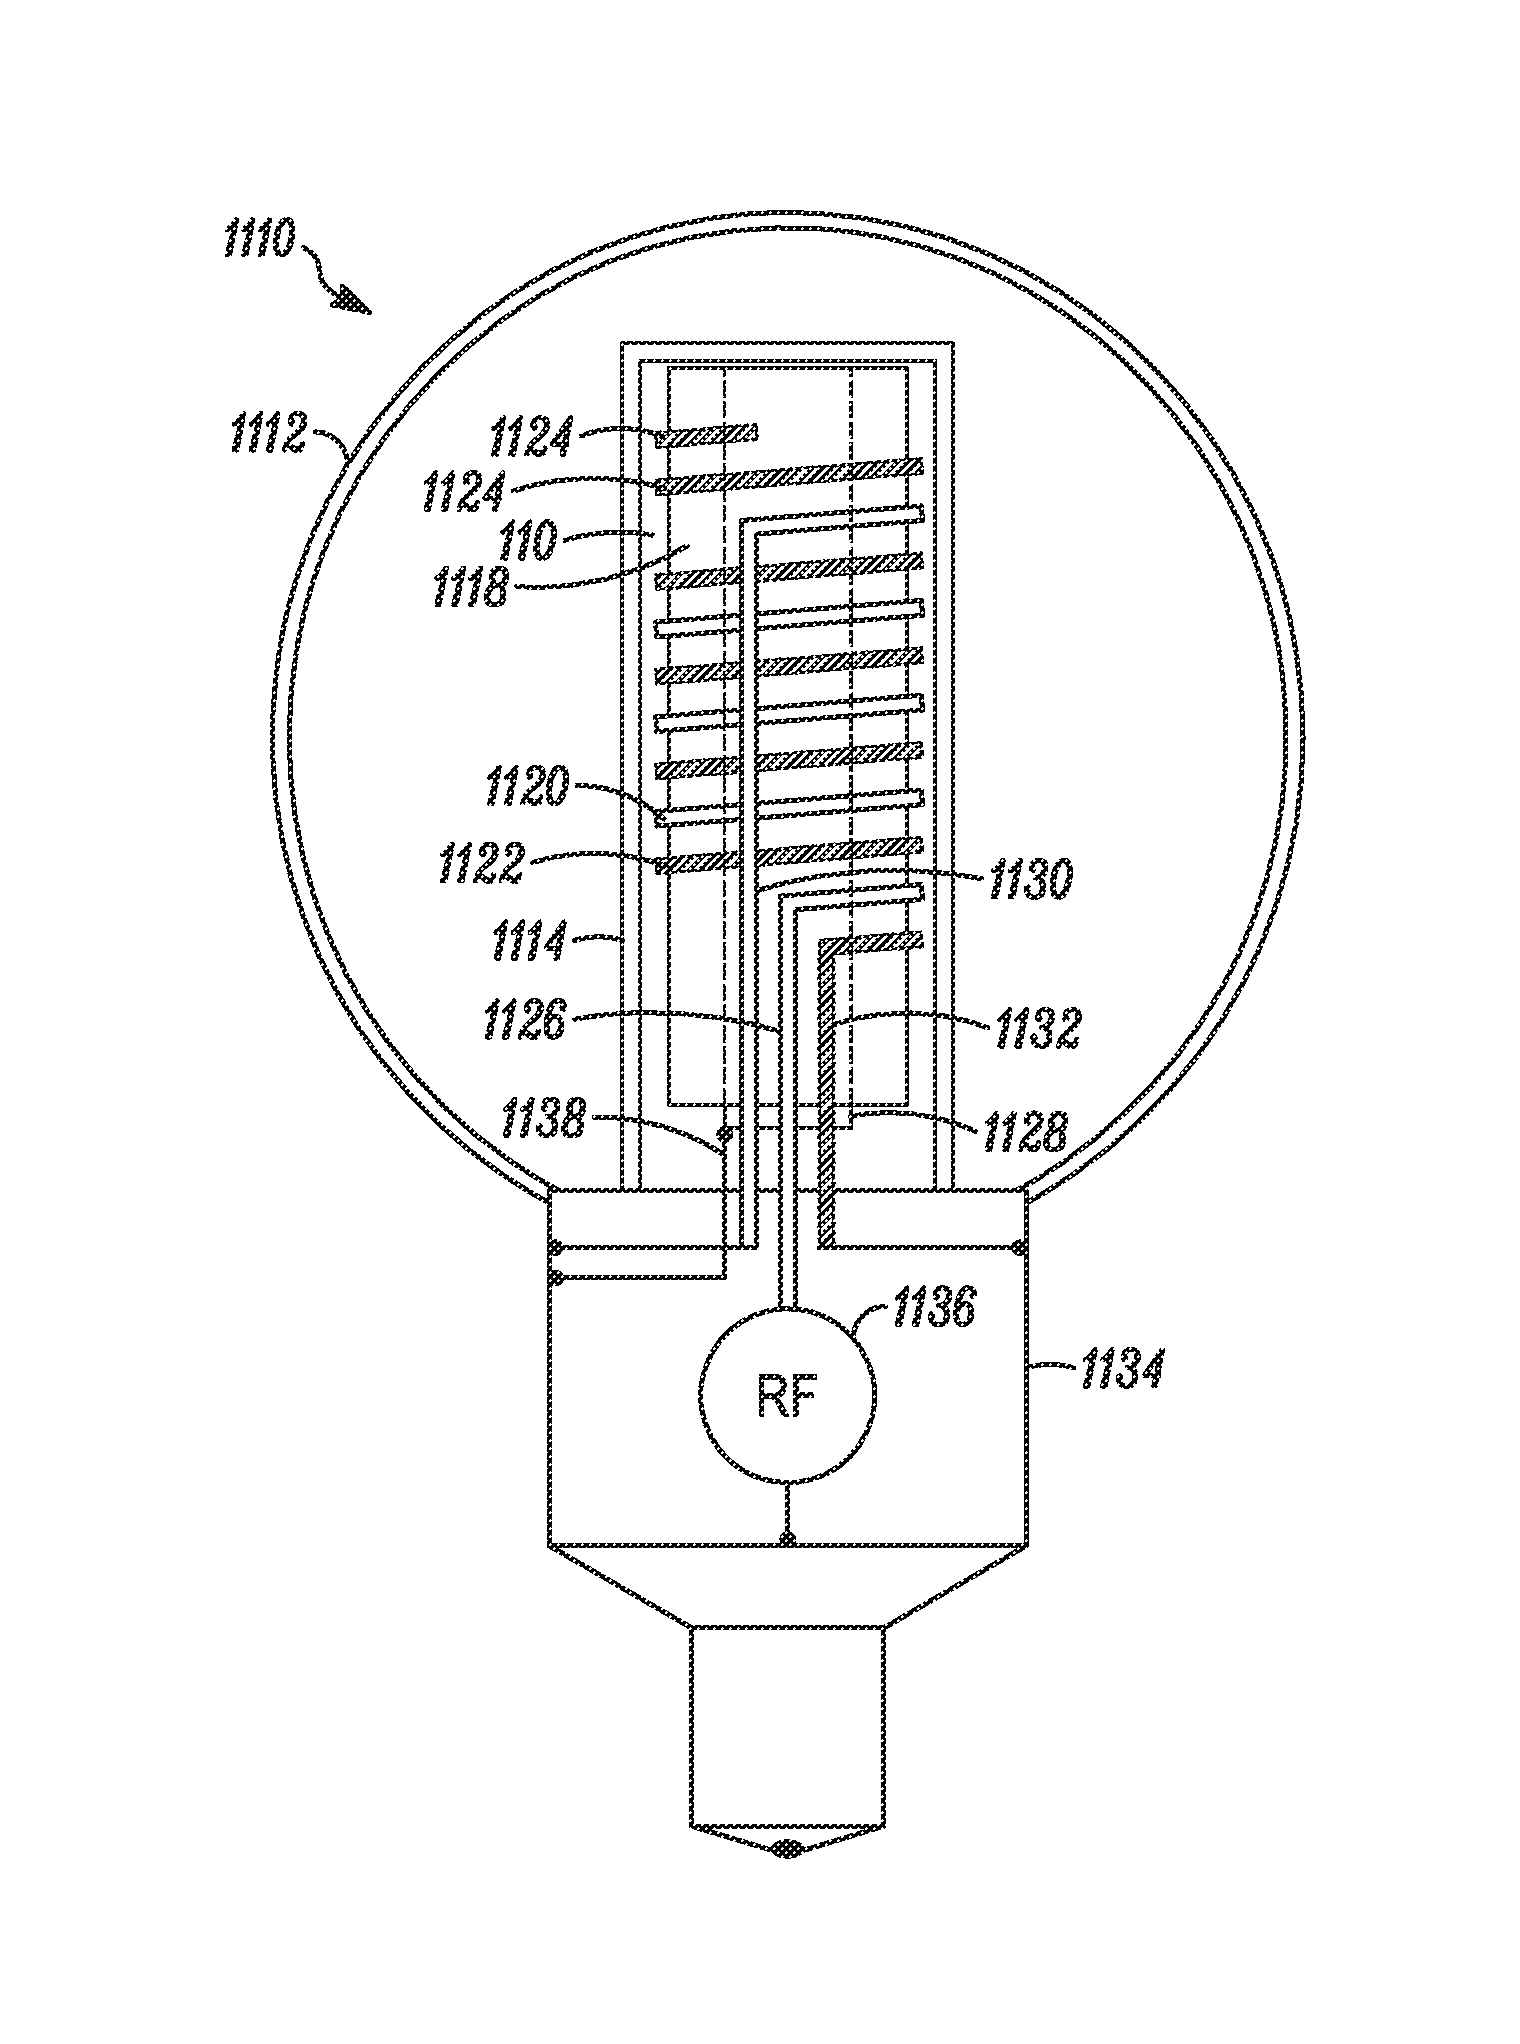 RF coupler stabilization in an induction RF fluorescent light bulb